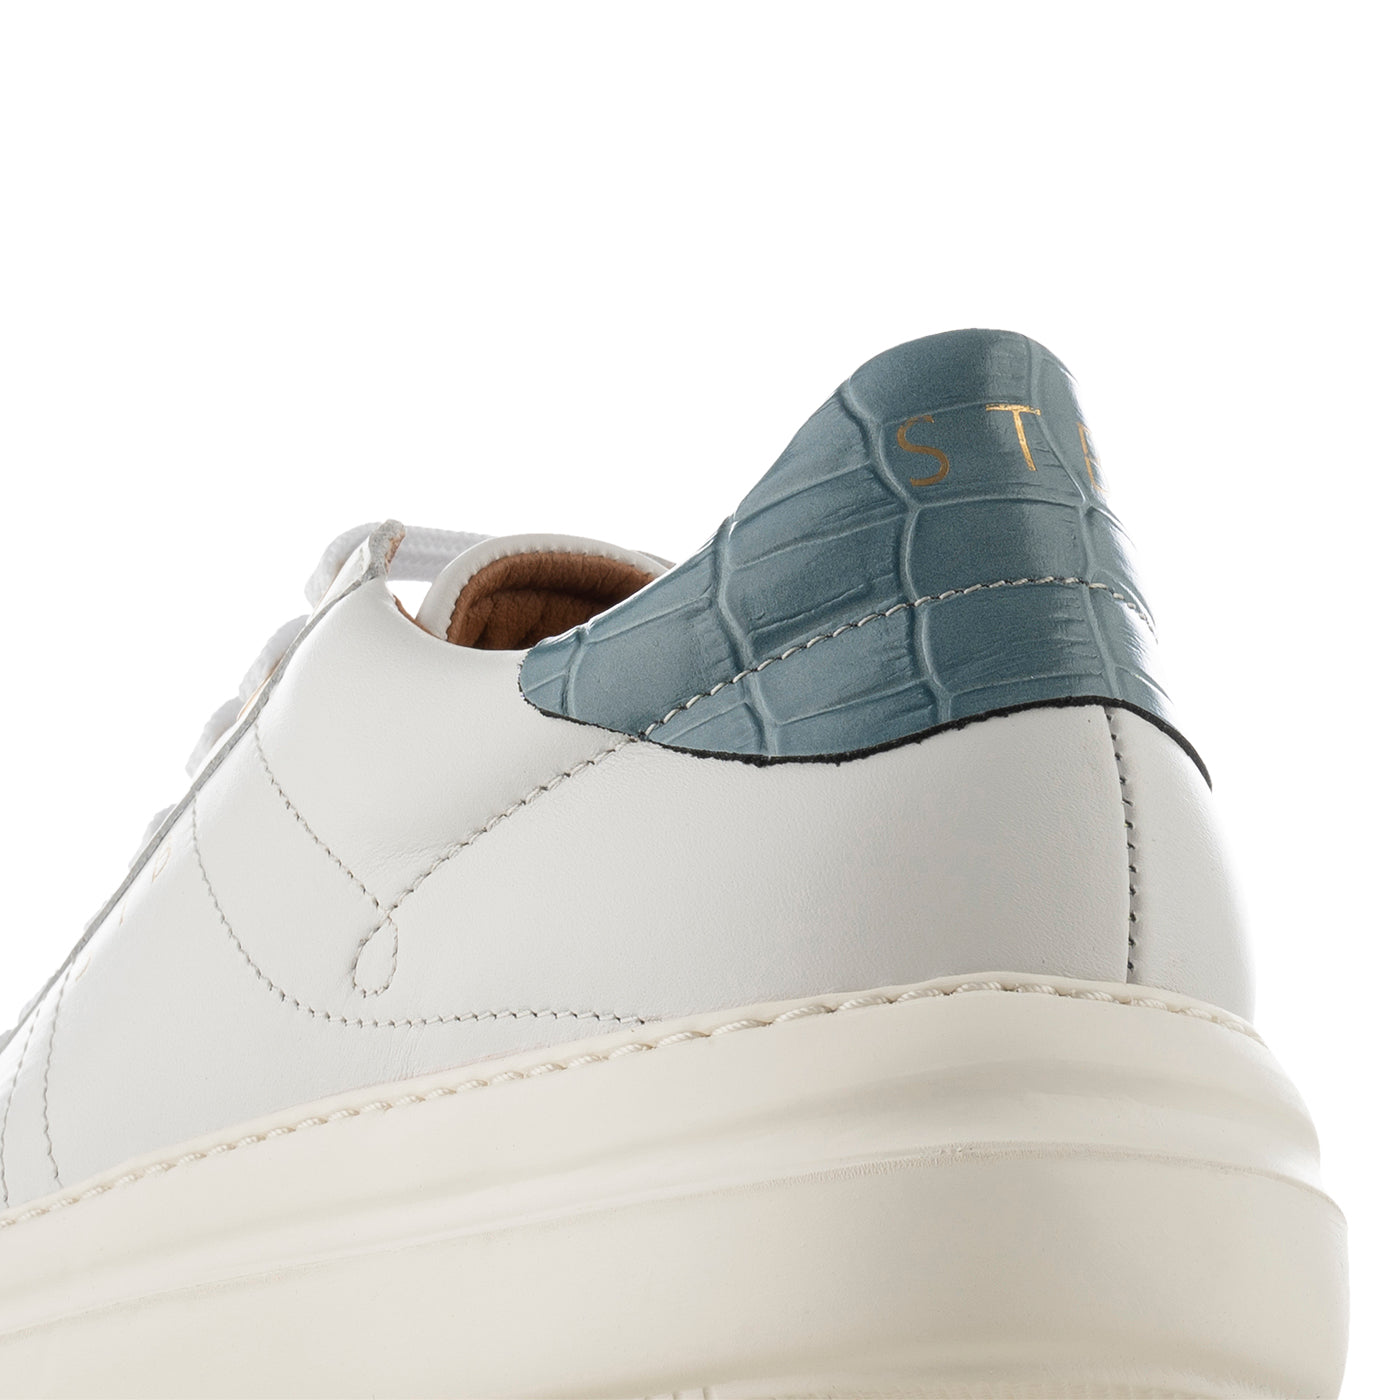 SHOE THE BEAR WOMENS Valda sneaker leather Sneakers 834 WHITE/BLUE CROCO